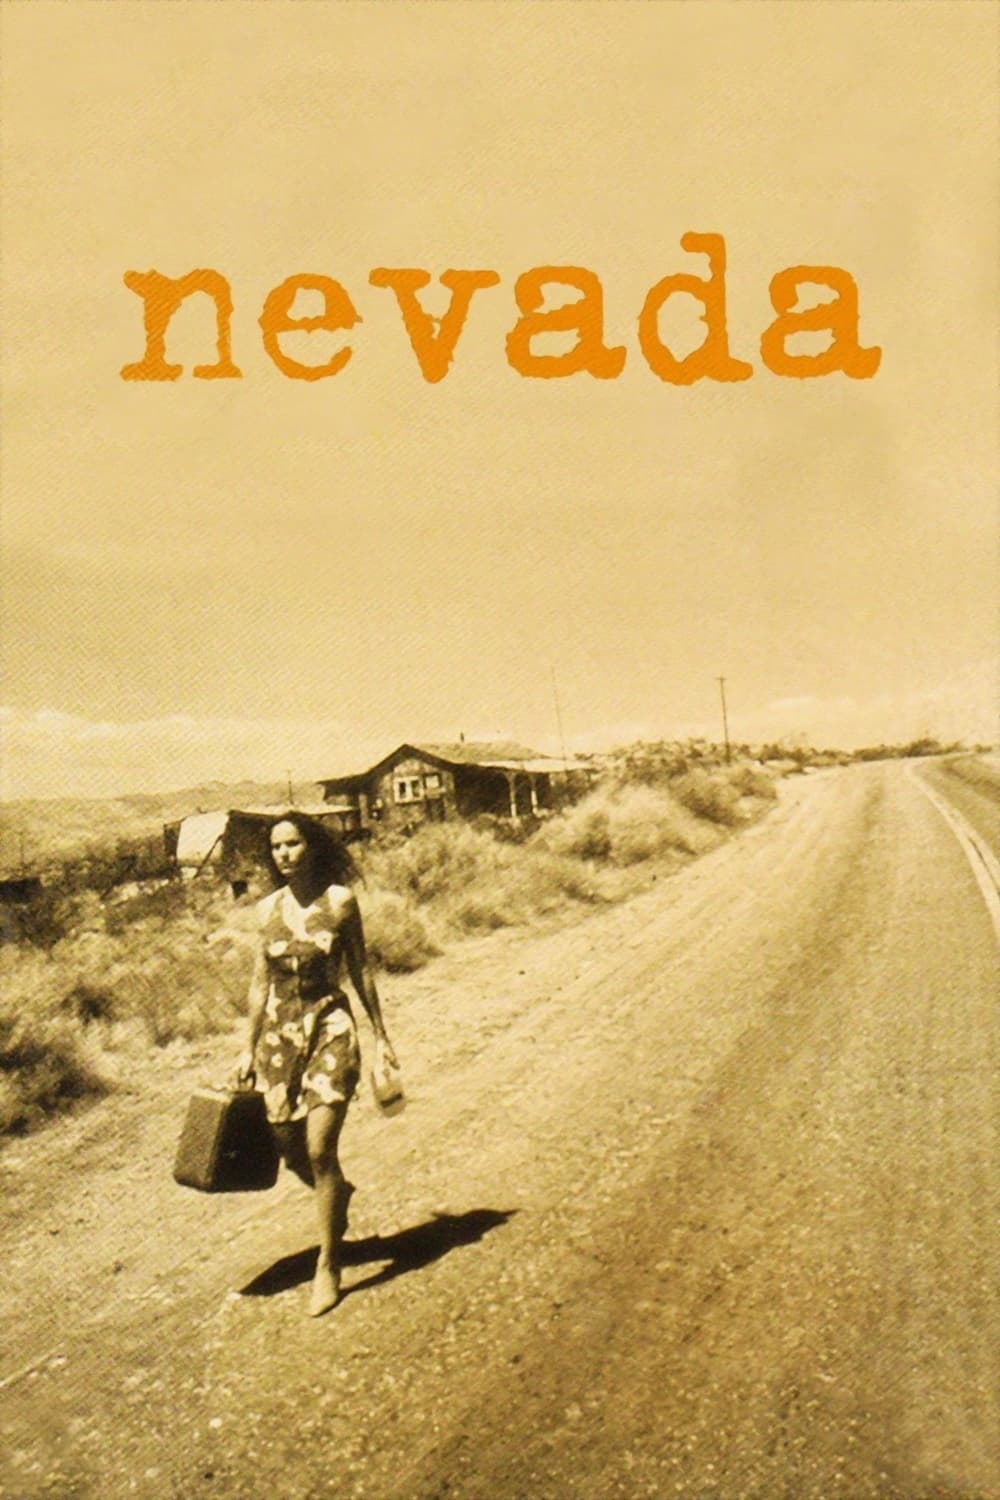 Nevada (1997)